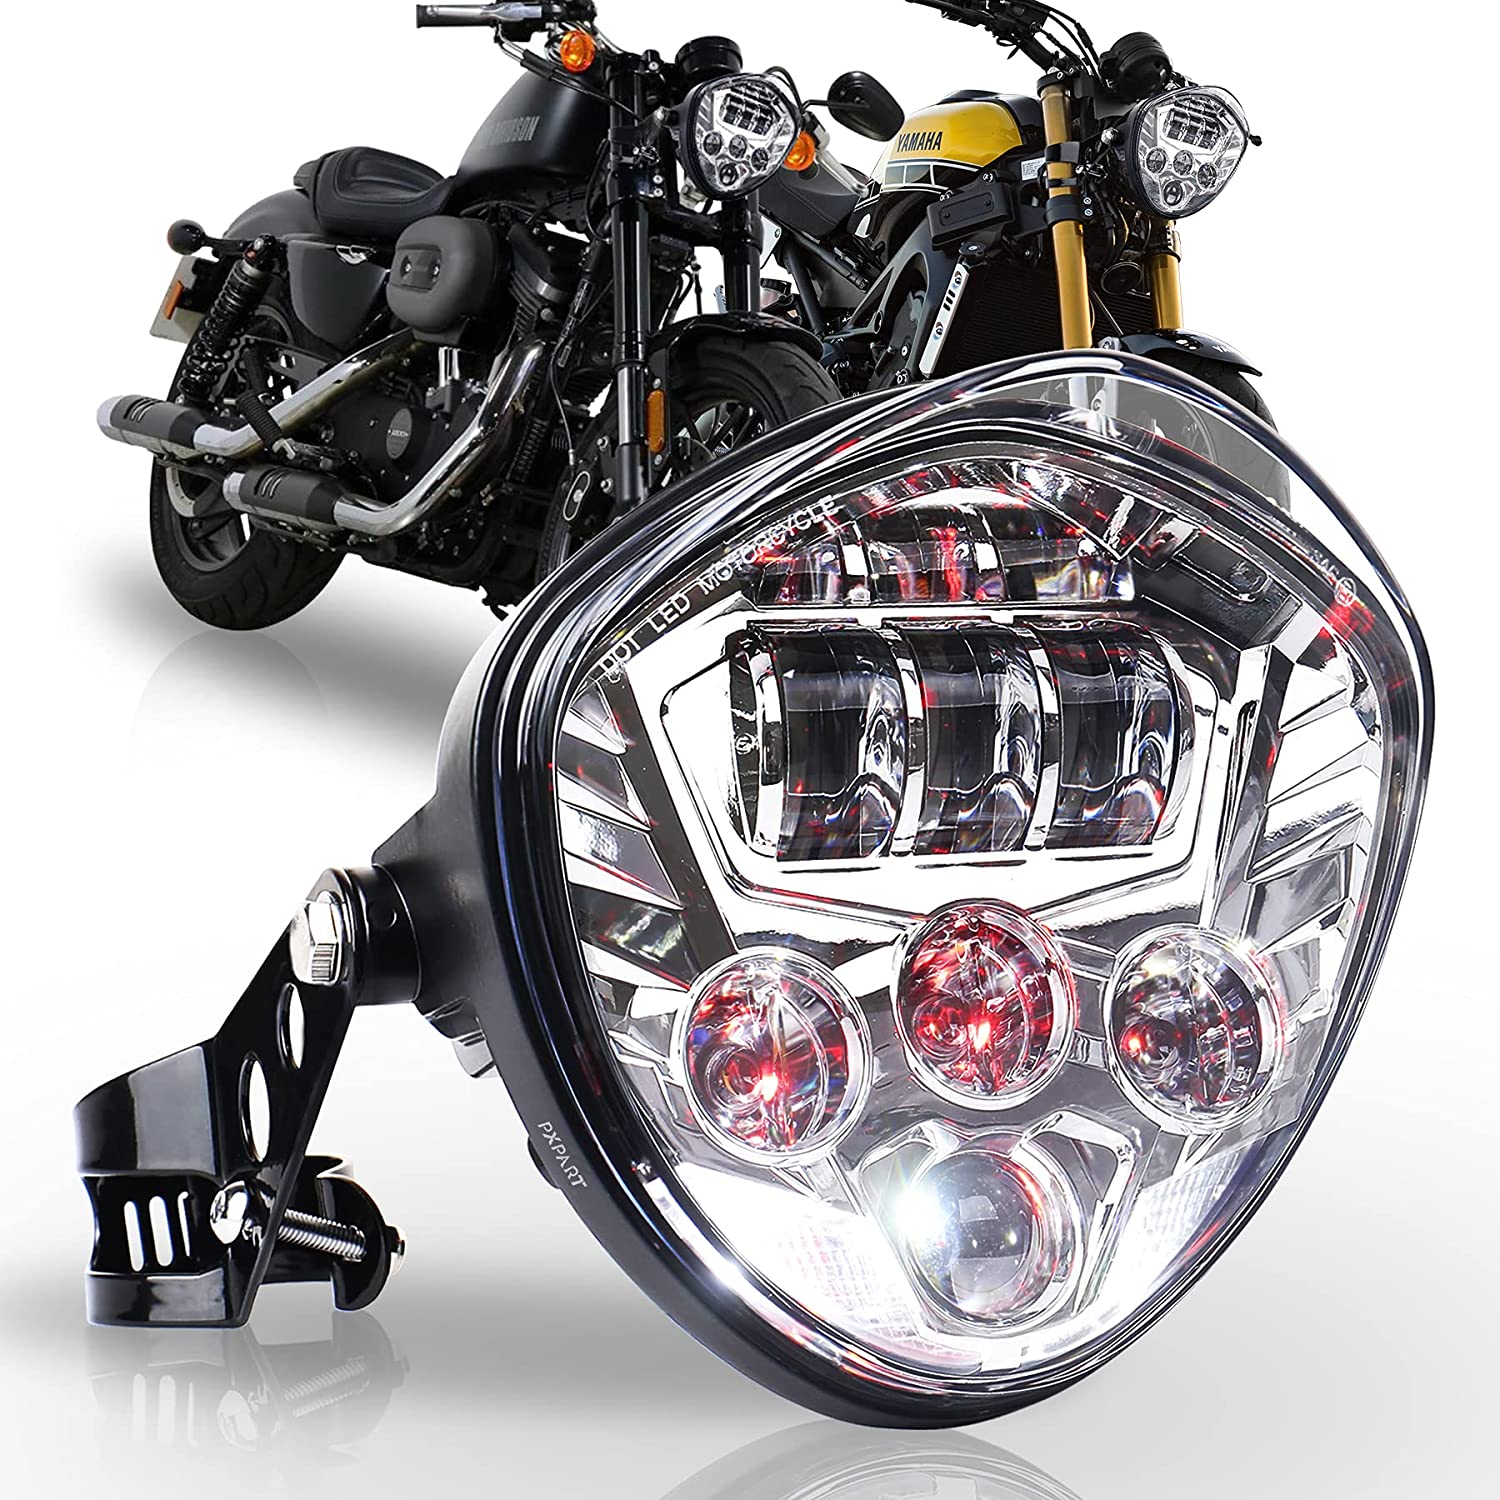 Motorcycle LED Headlight 7inch Hi Lo Beam White&Red DRL with Universal Motorcycle Mounts Bracket Compatible with Harley Honda Kawasaki Suzuki Yamaha